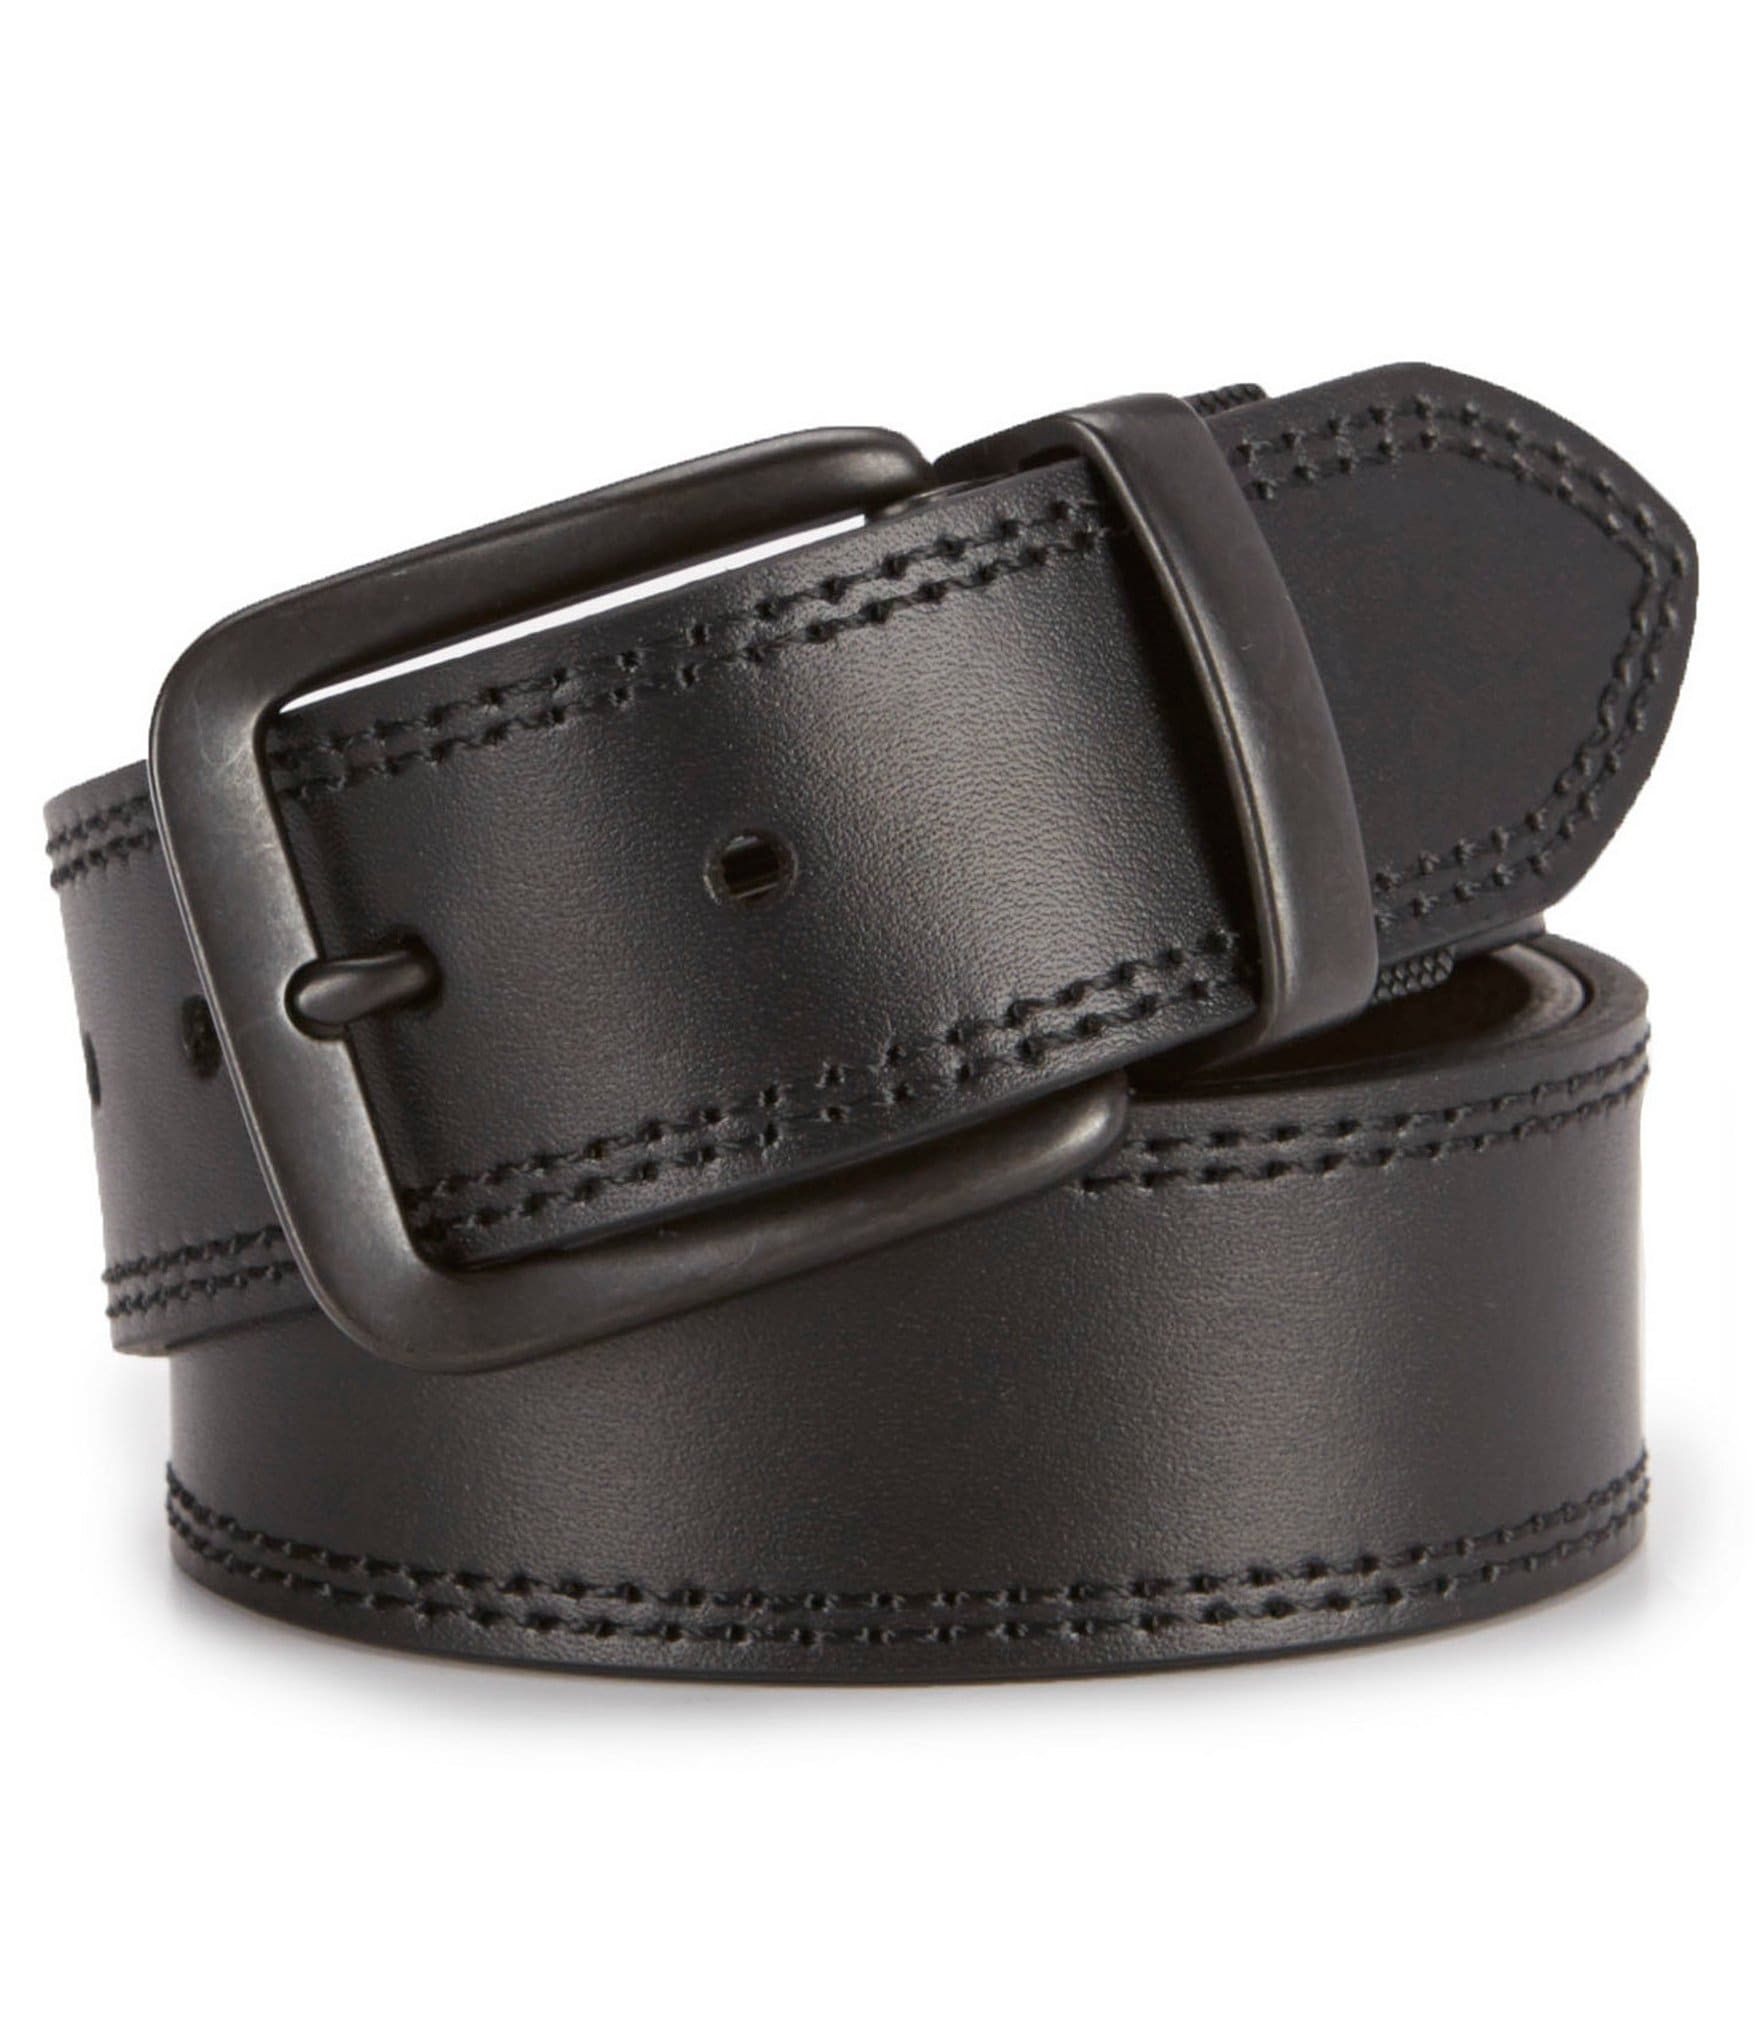 Buy LOUIS STITCH Men Textured Leather Reversible Formal Belt